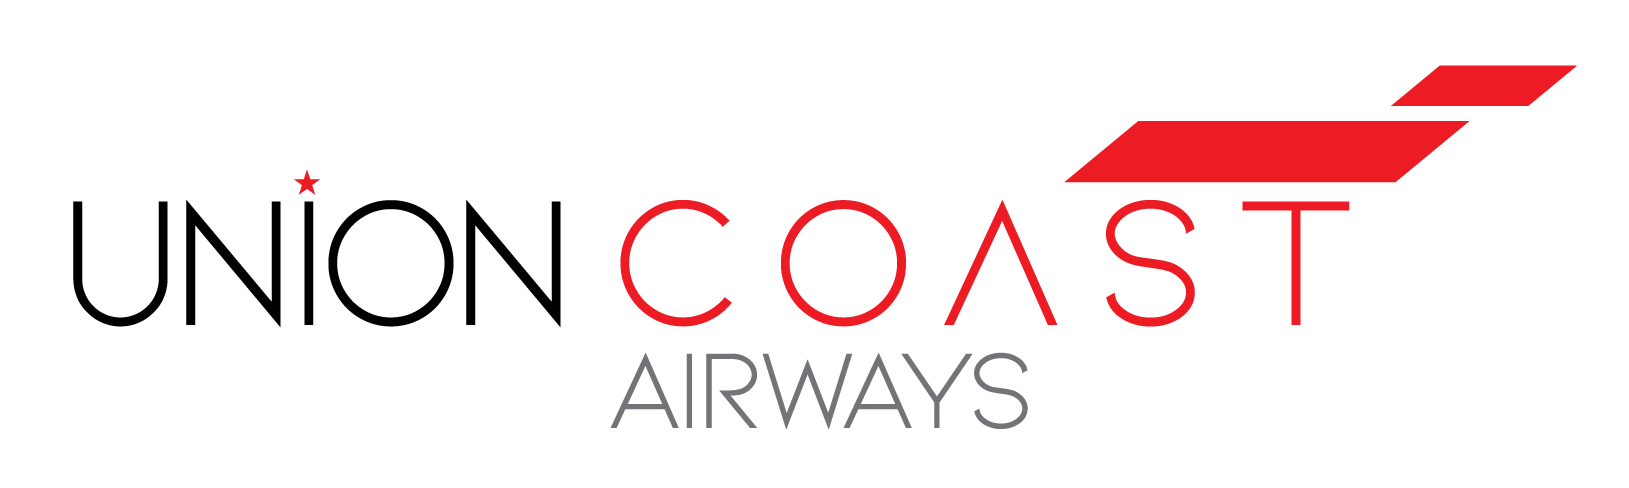 Union Coast Airways, Inc.